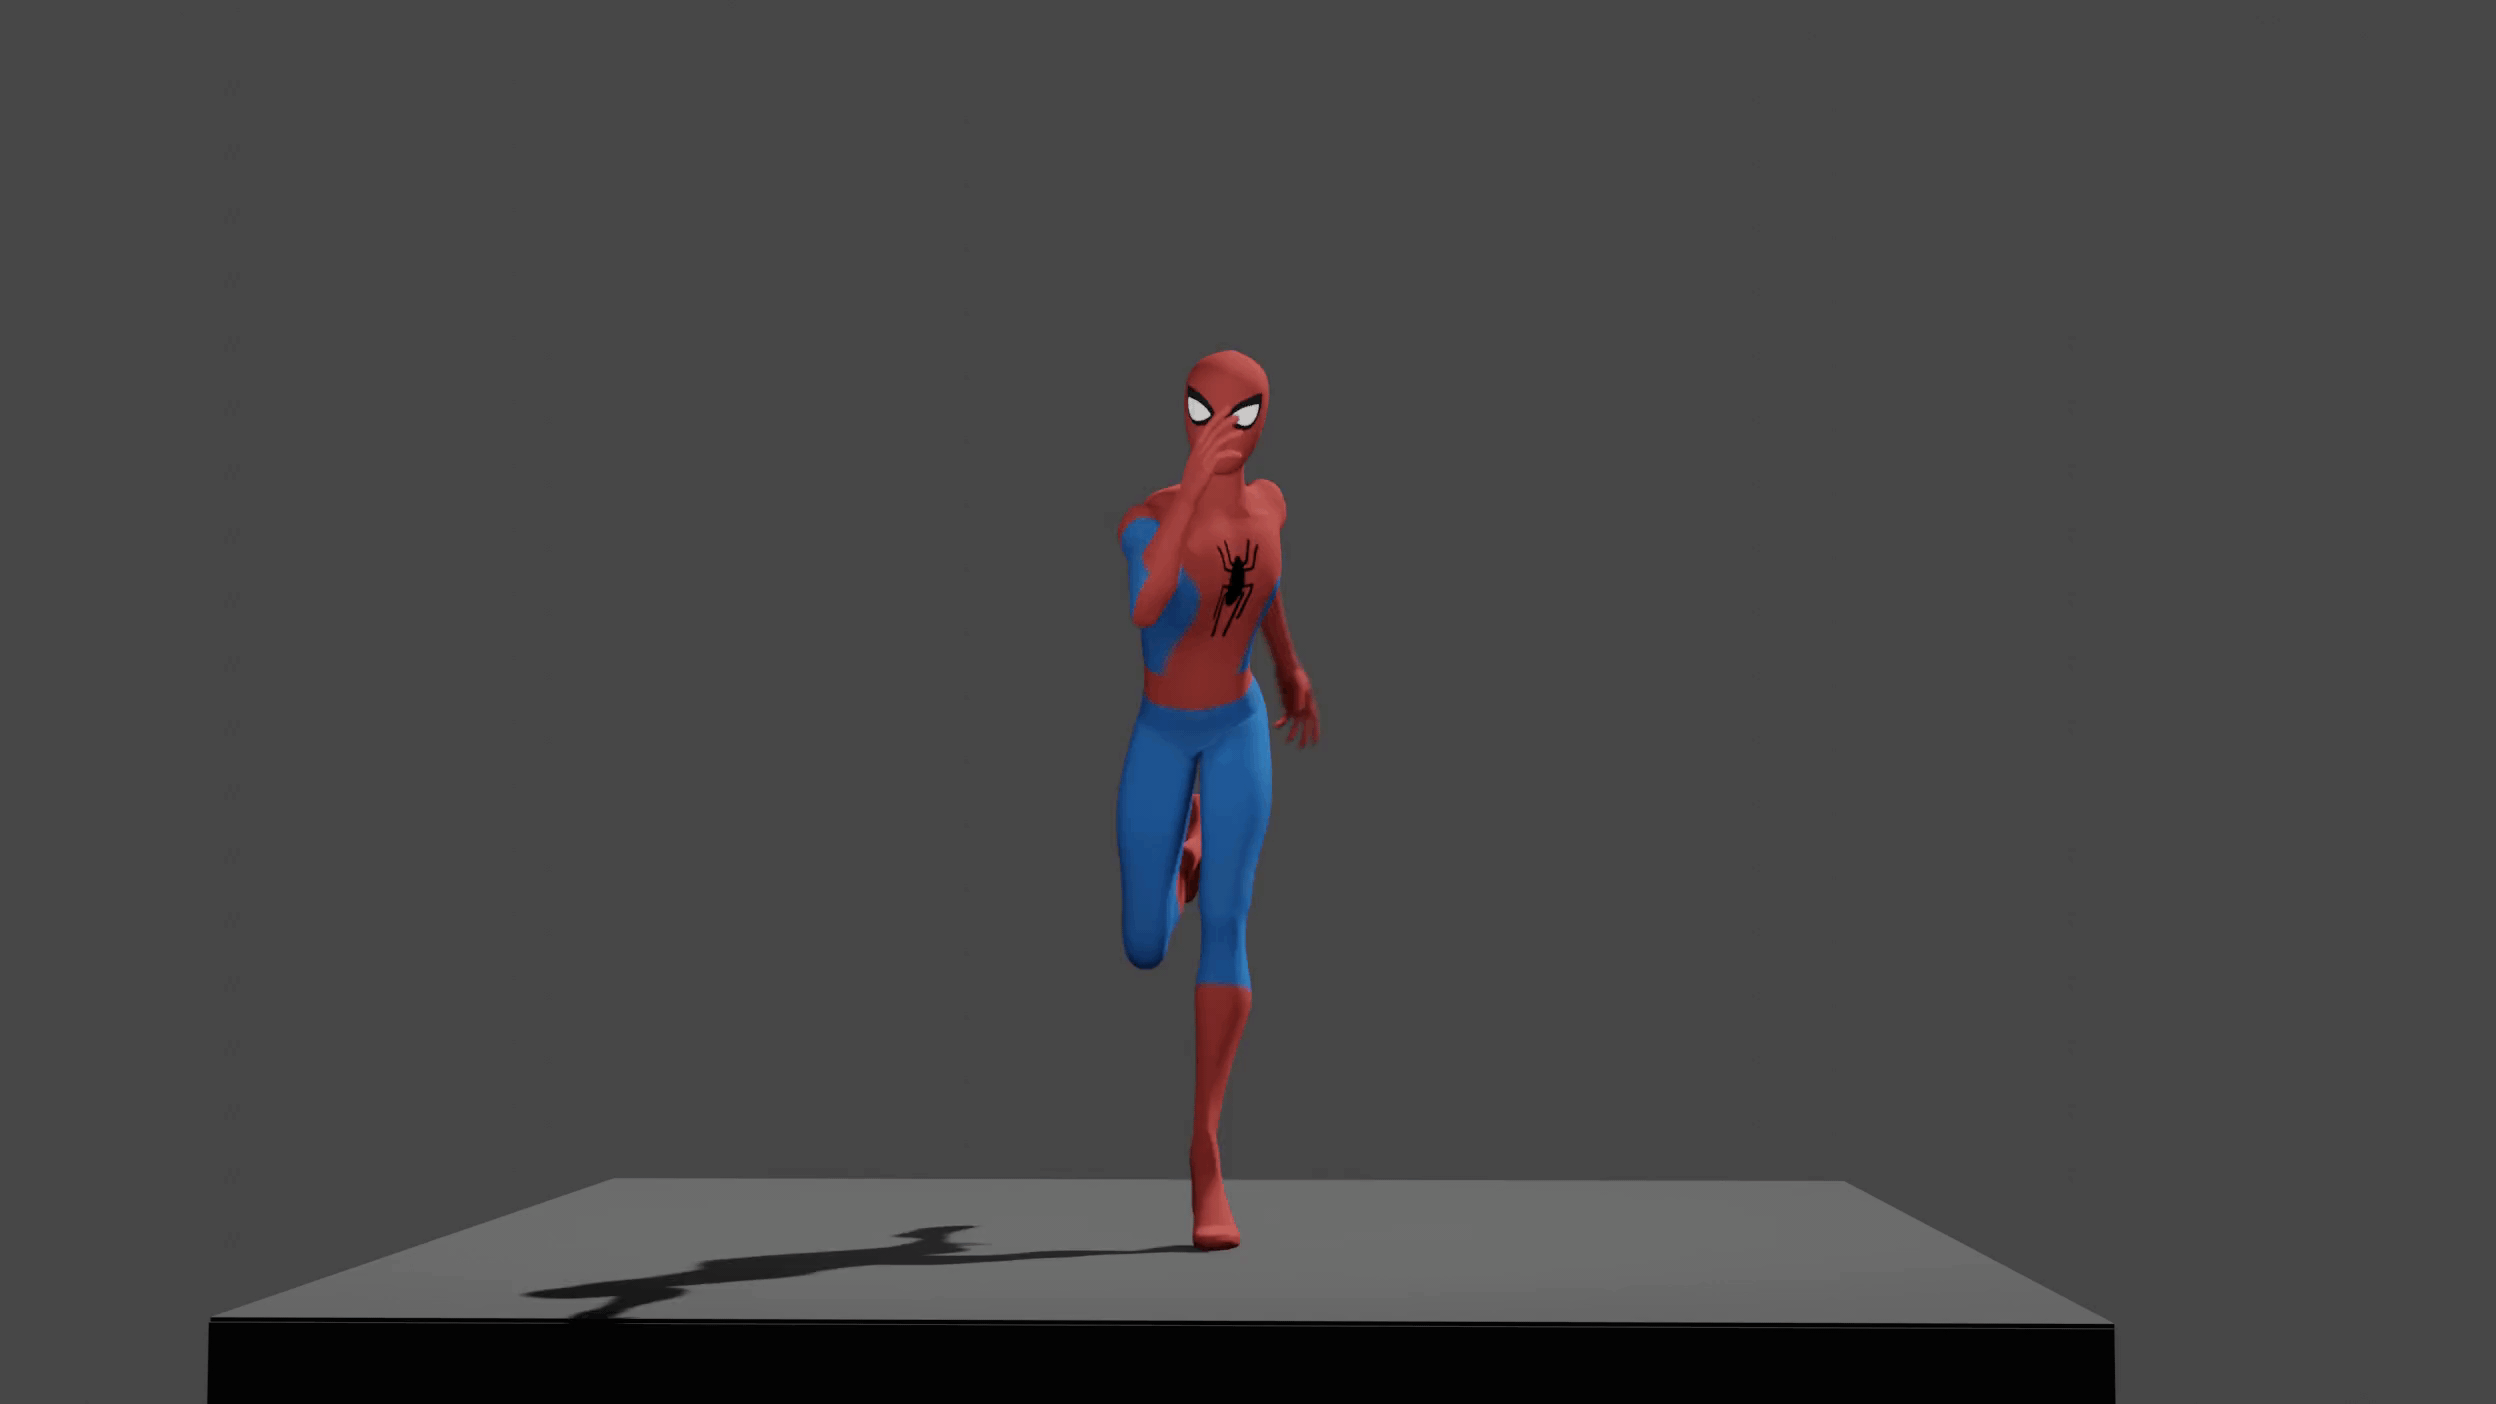 ArtStation - Spider man run animation